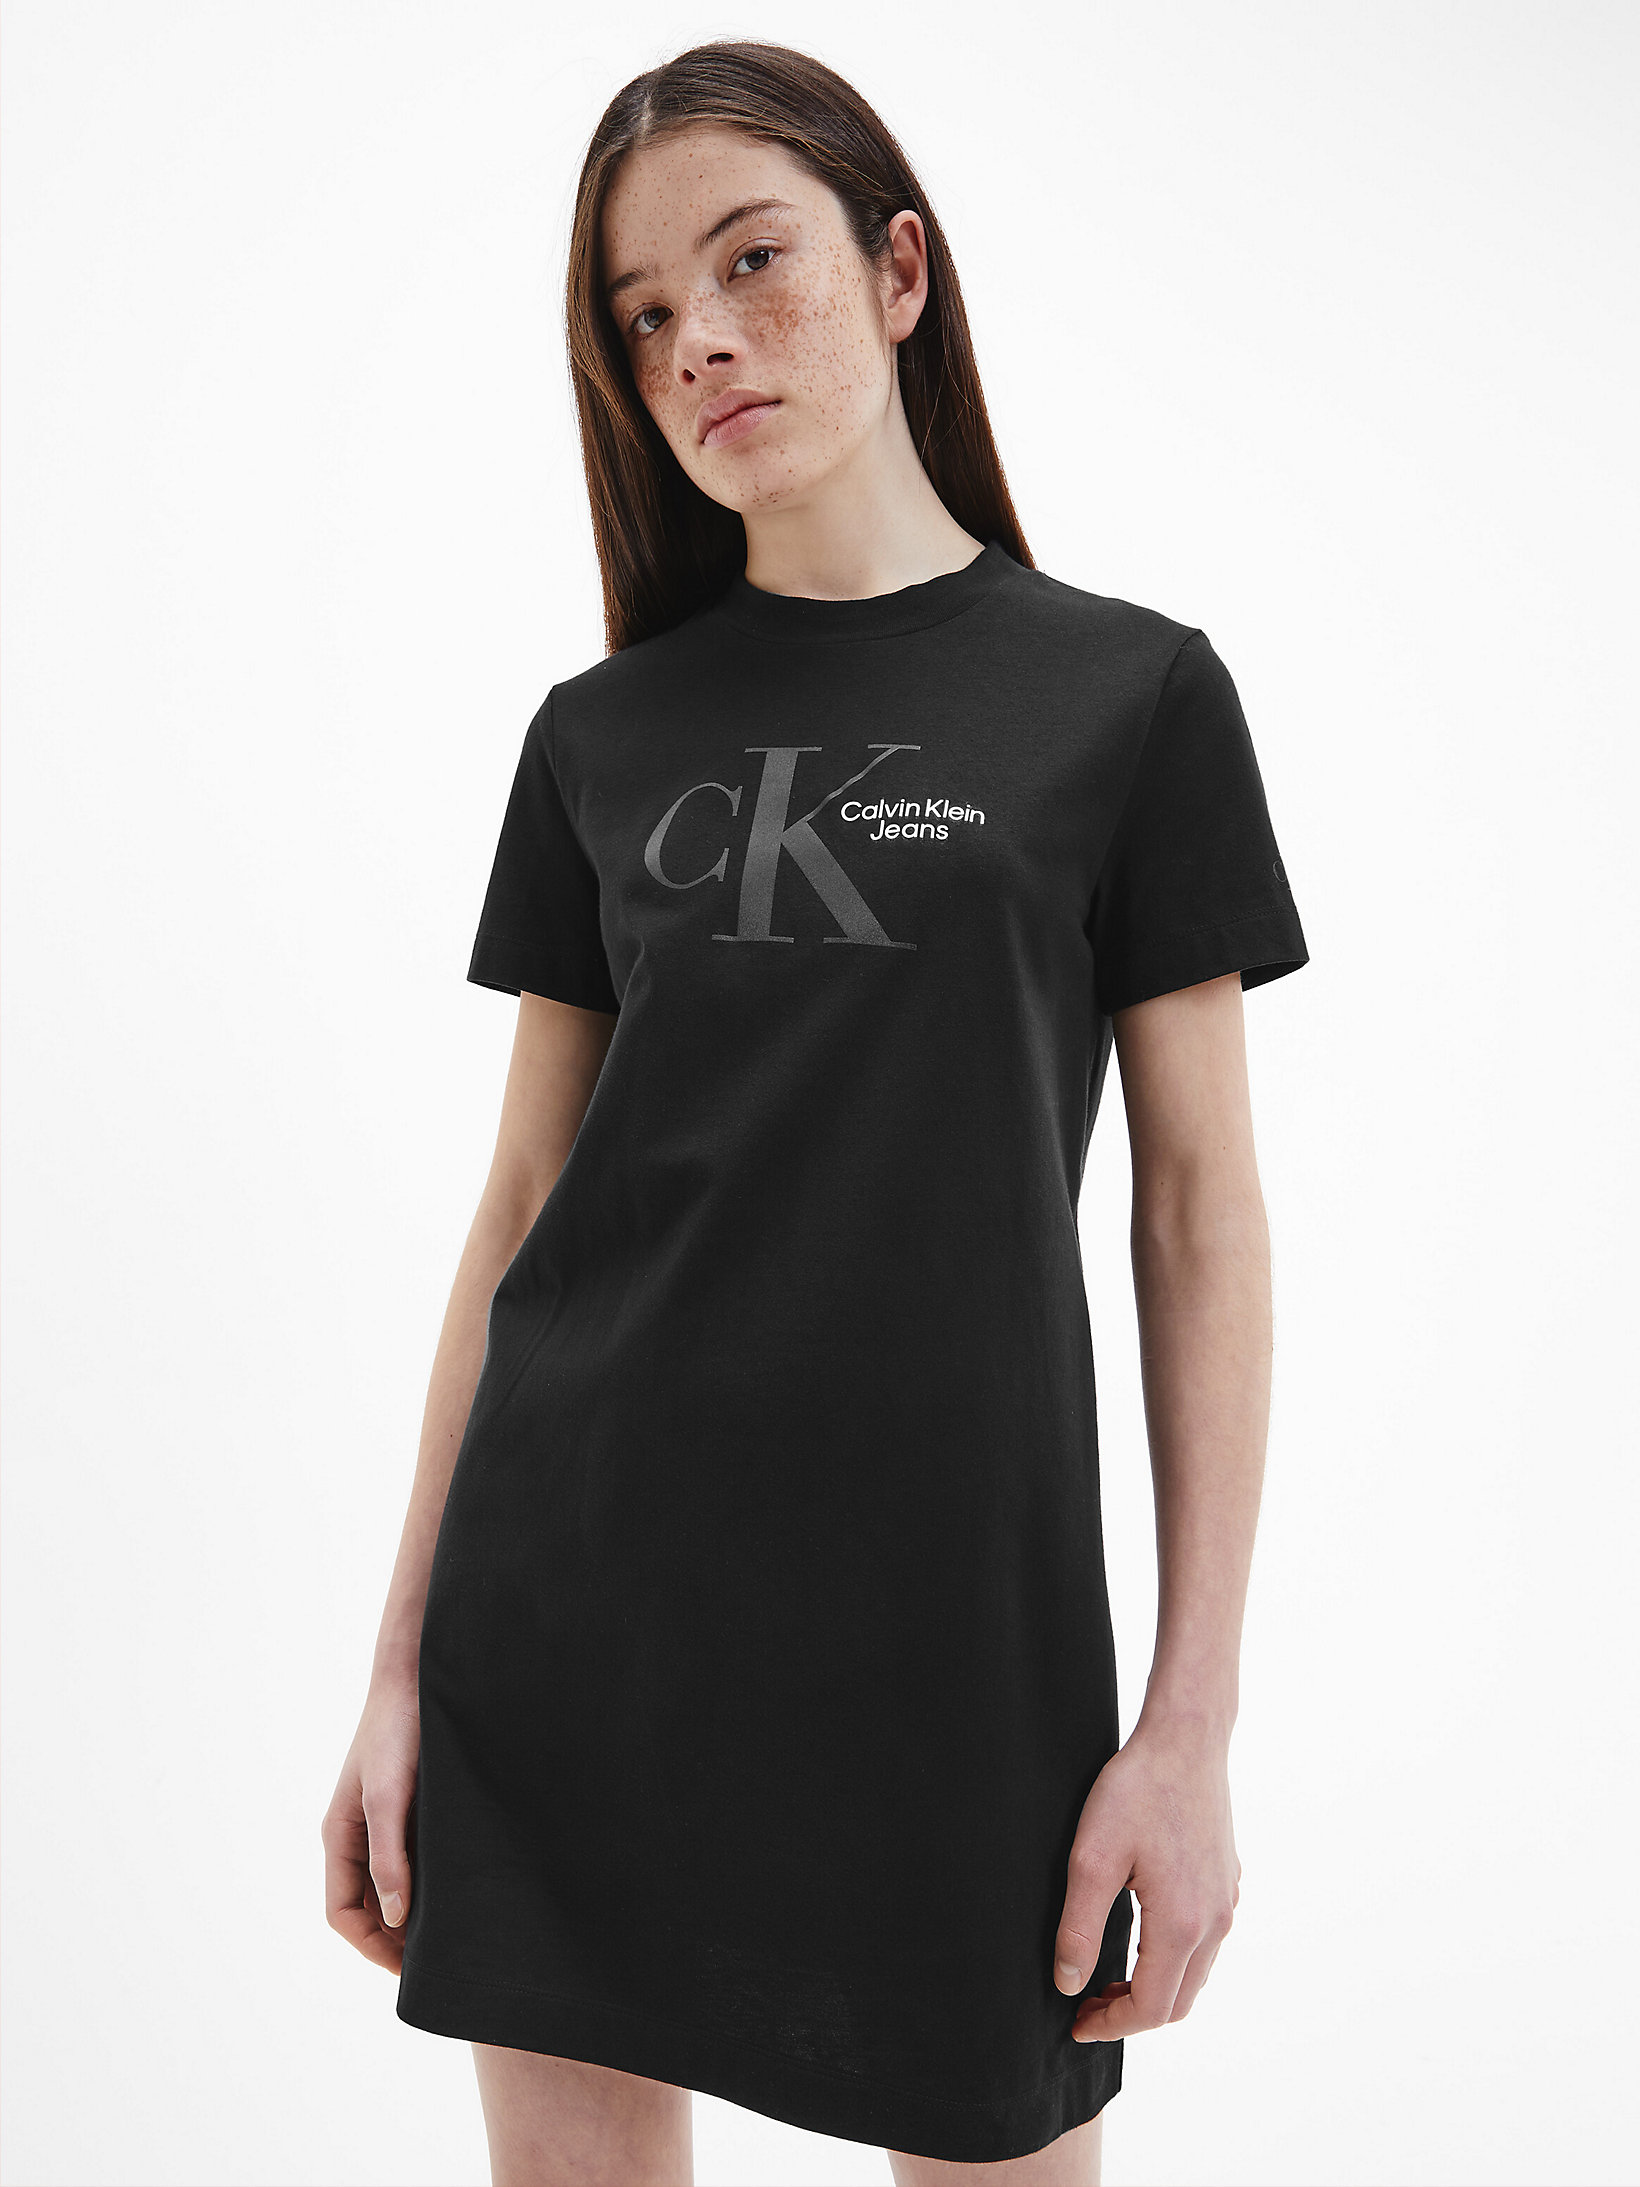 CK Black Abito A T-Shirt Con Monogramma undefined donna Calvin Klein